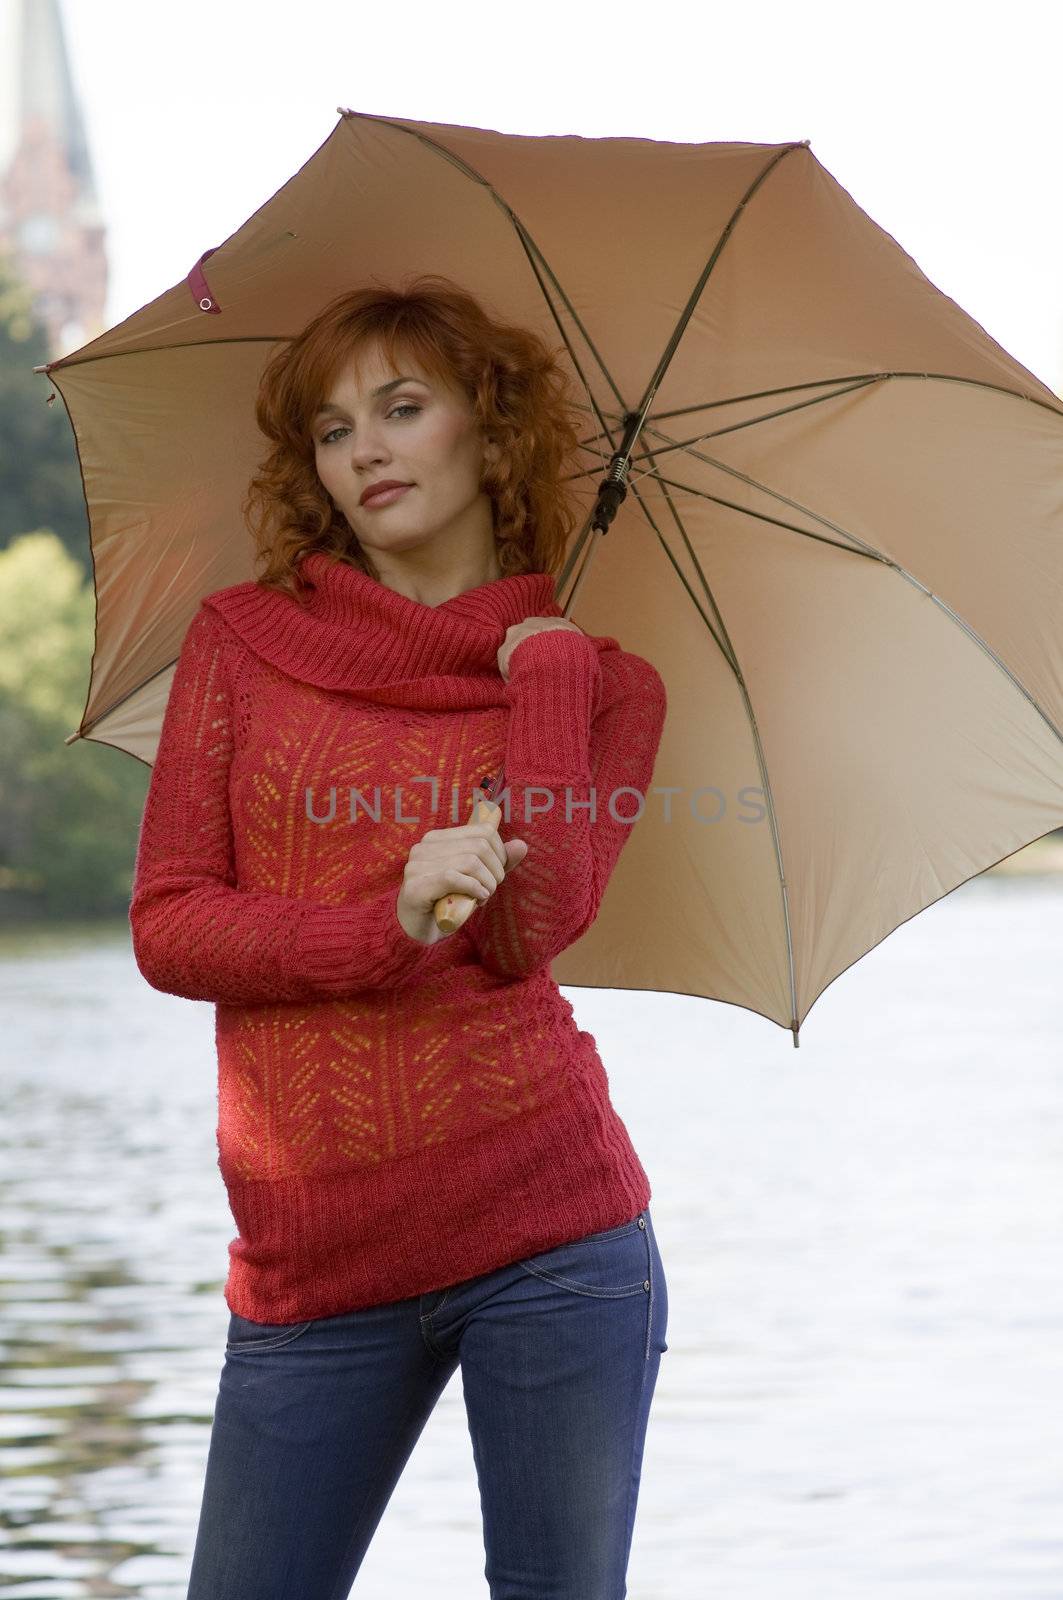 under umbrella by fotoCD